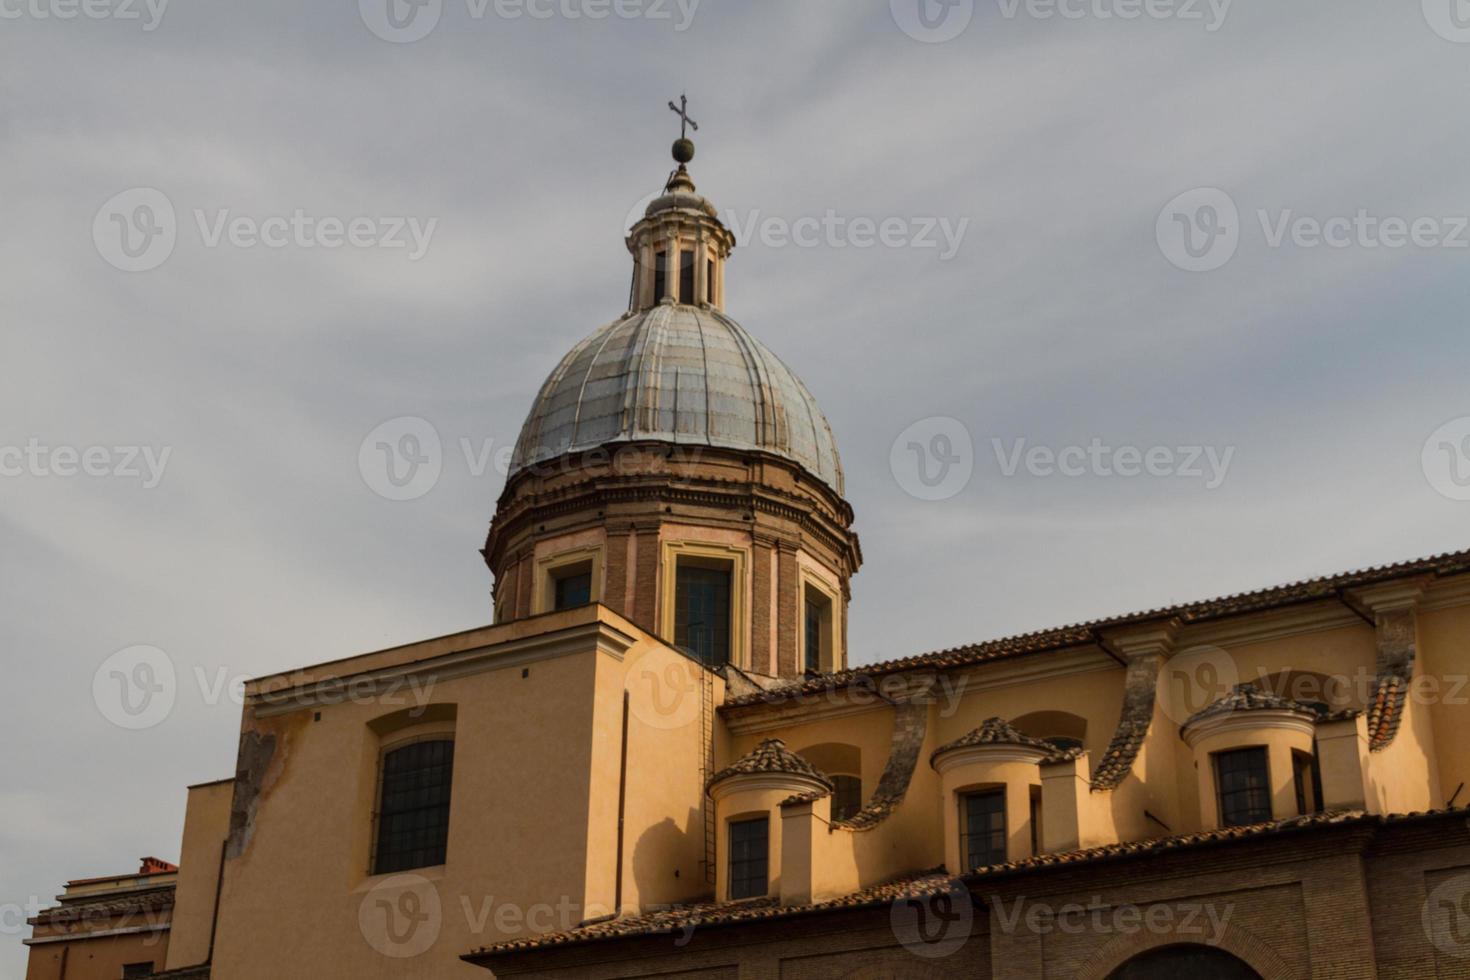 gran iglesia en el centro de roma, italia. foto